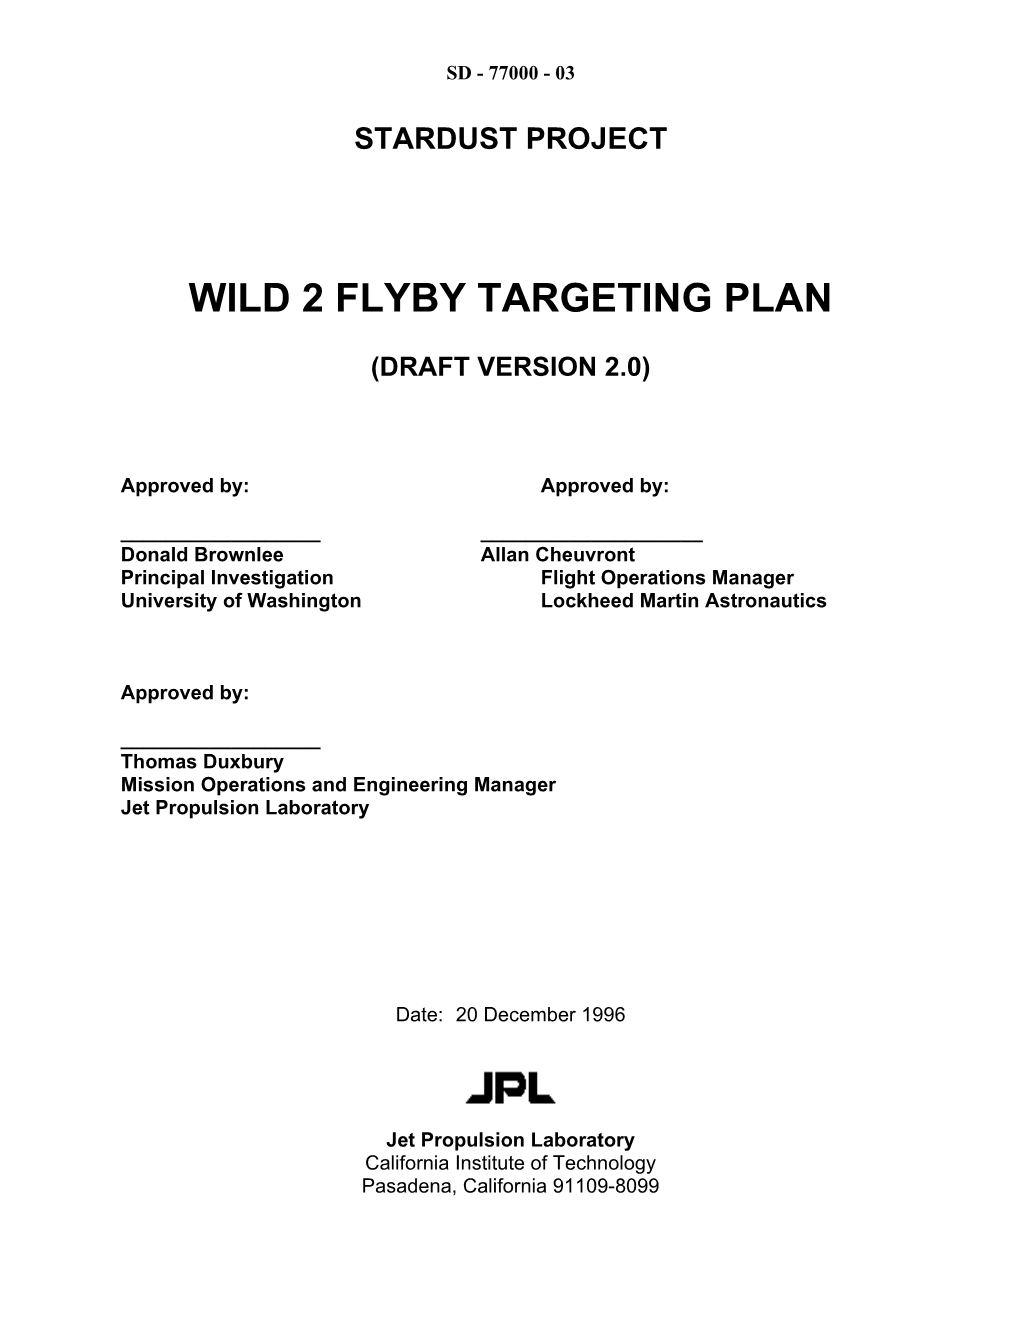 Wild 2 Flyby Targeting Plan